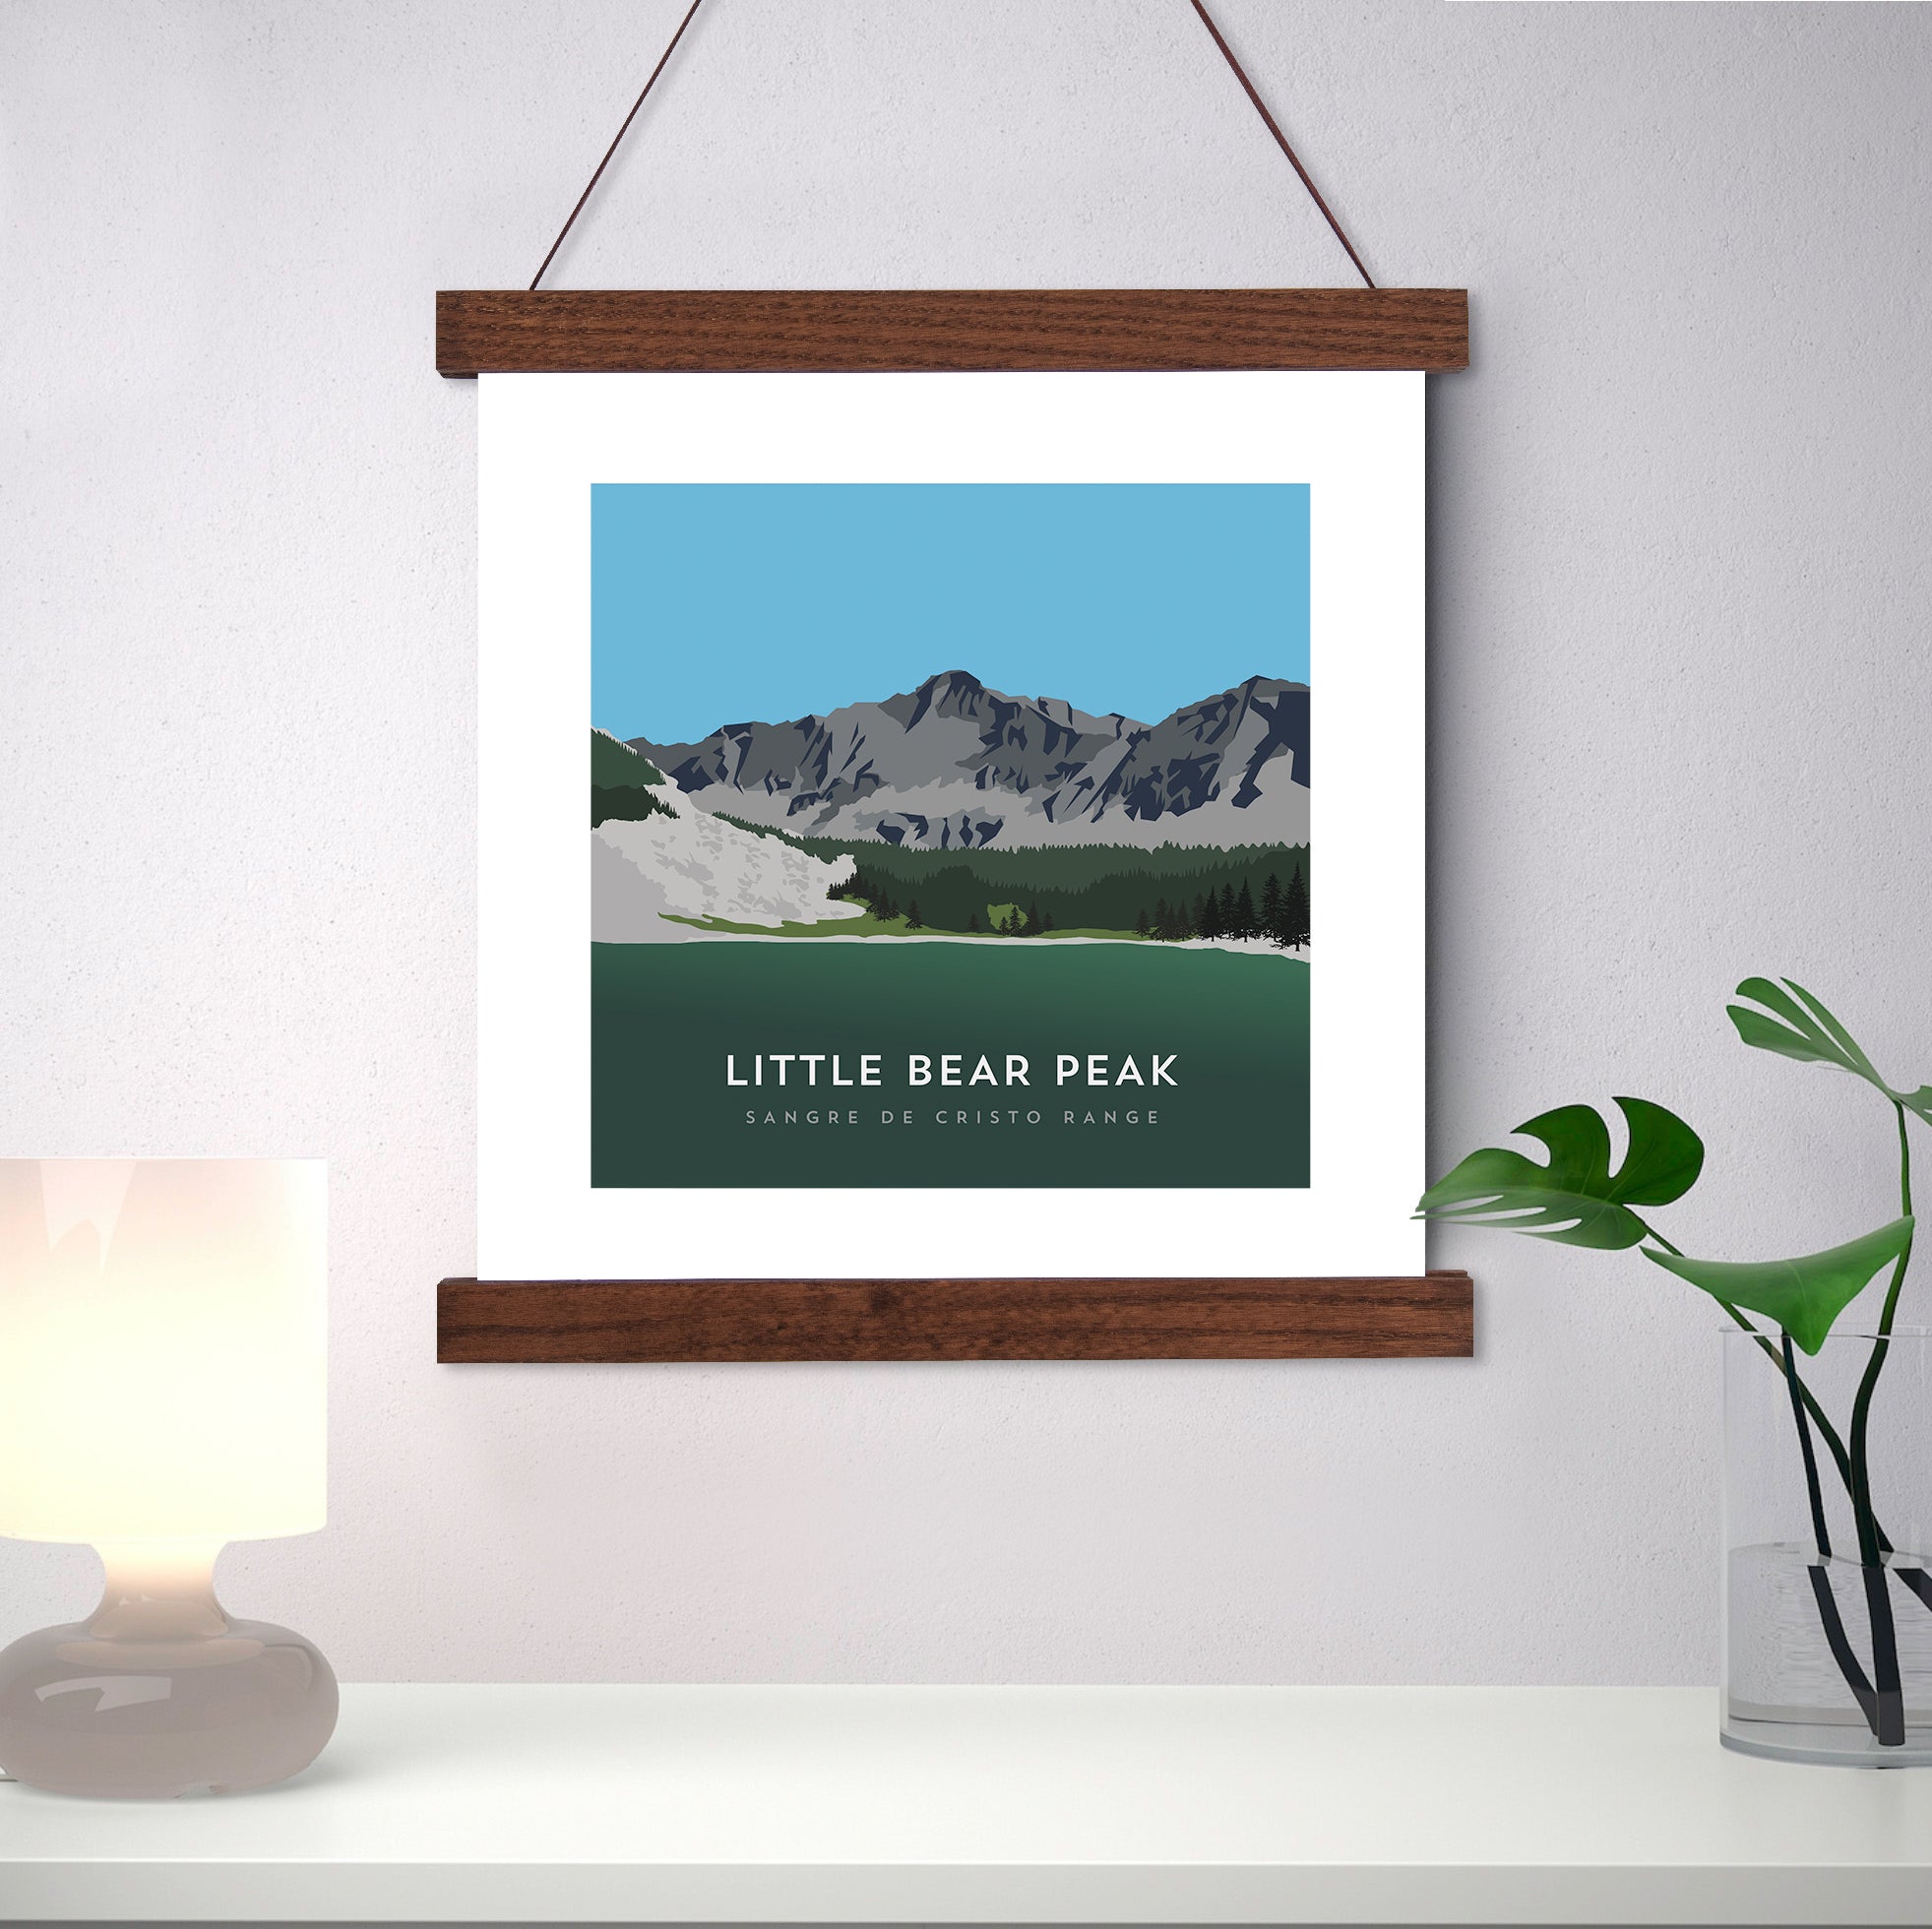 Little Bear Peak Colorado 14er Print